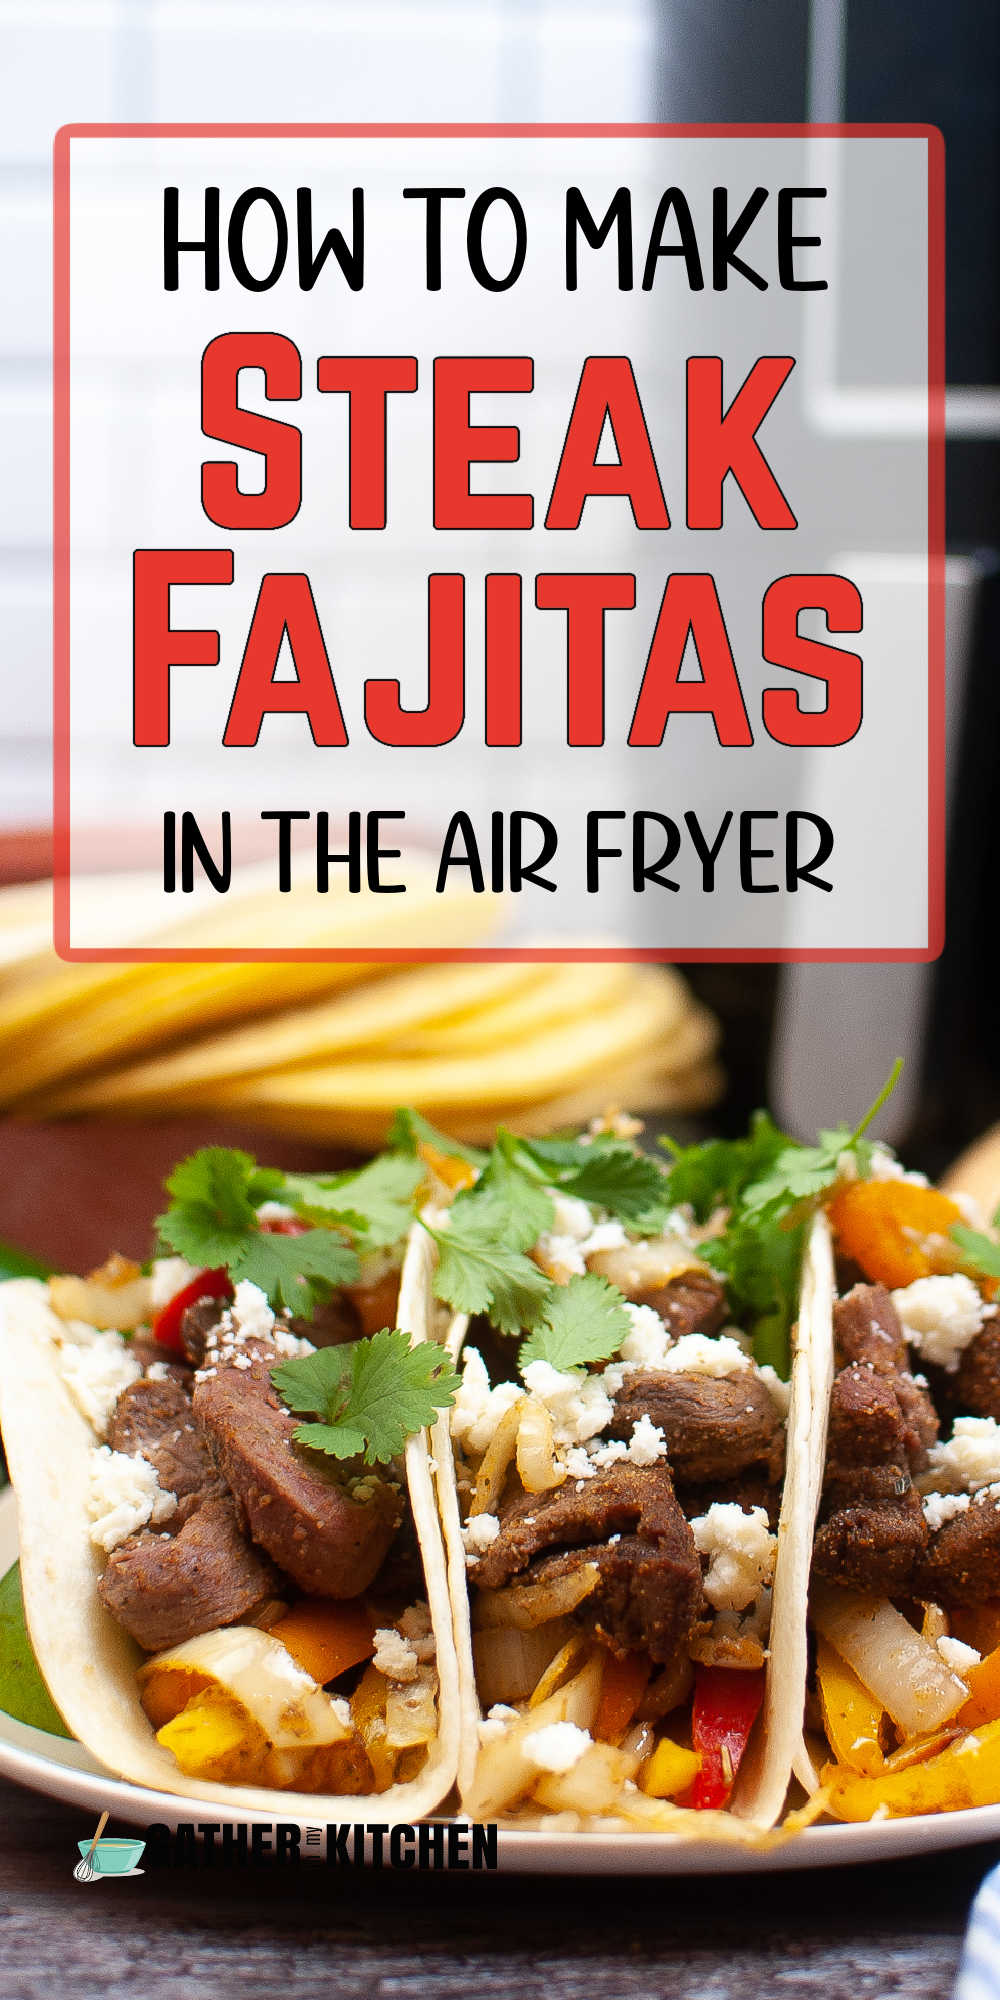 Pin image: top says "how to make steak fajitas in the air fryer" and bottom has a closeup of steak fajitas on a plate.